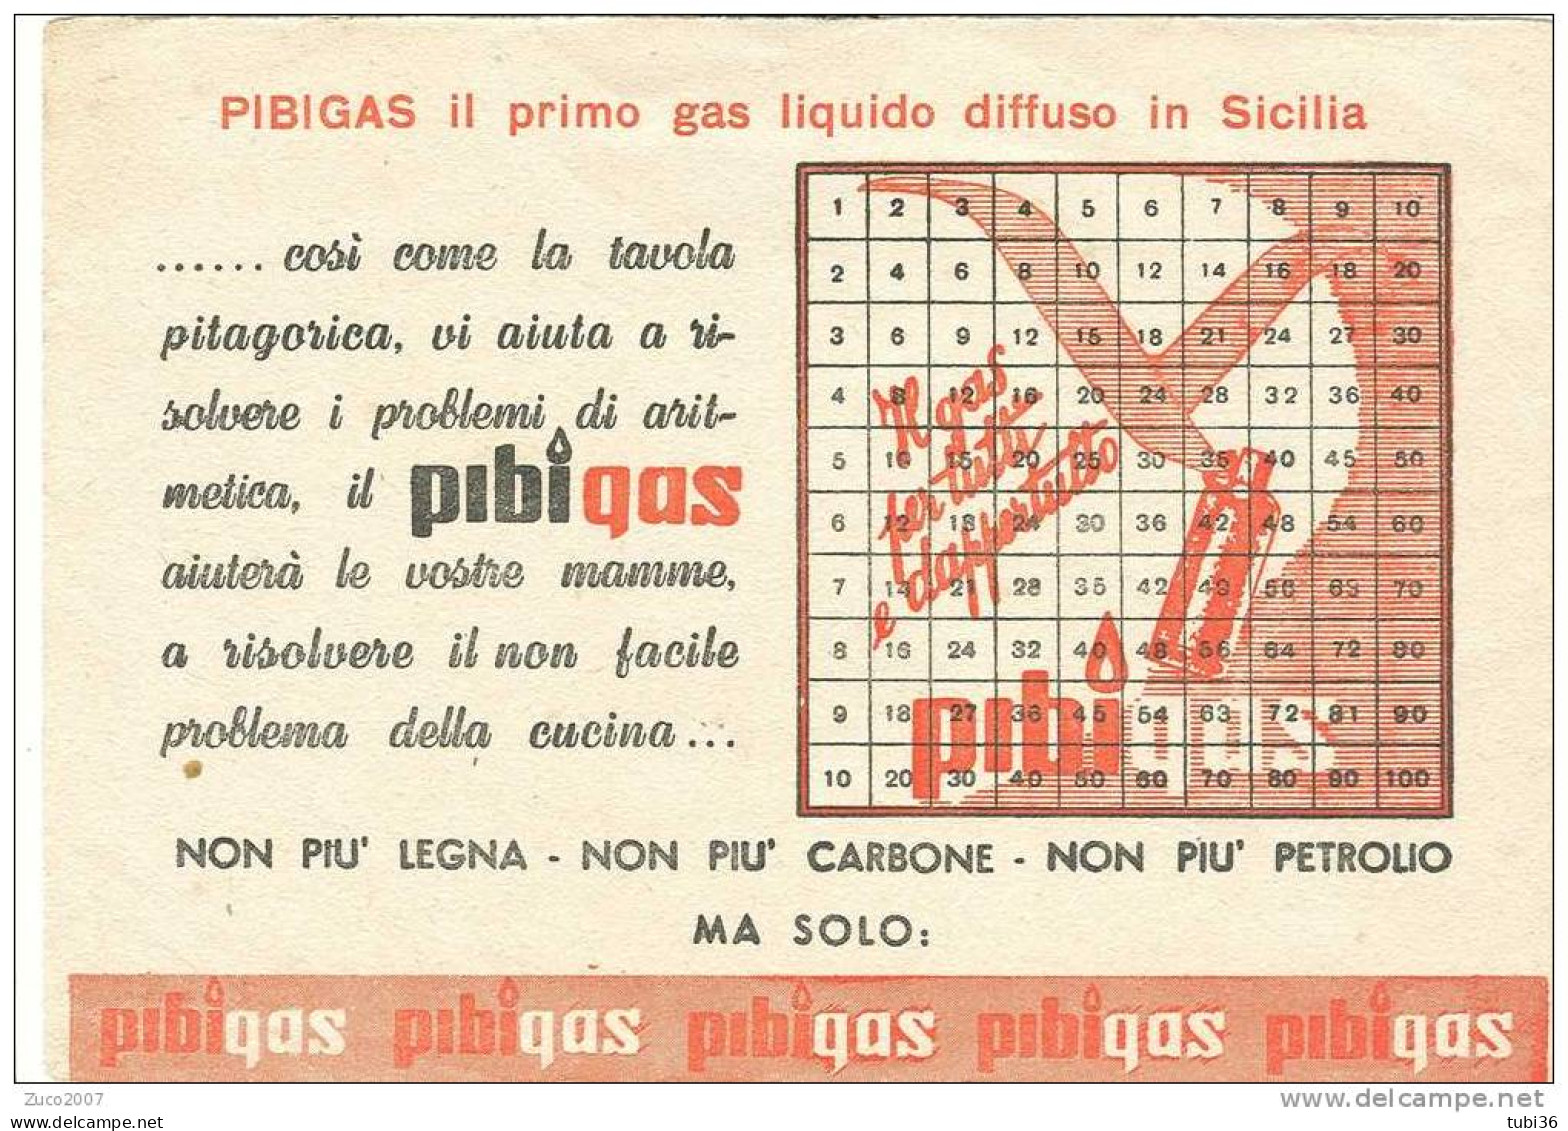 PIBIGAS - CARTA PUBBLICITARIA  DIFFUSIONE GAS IN SICILIA. - Electricité & Gaz